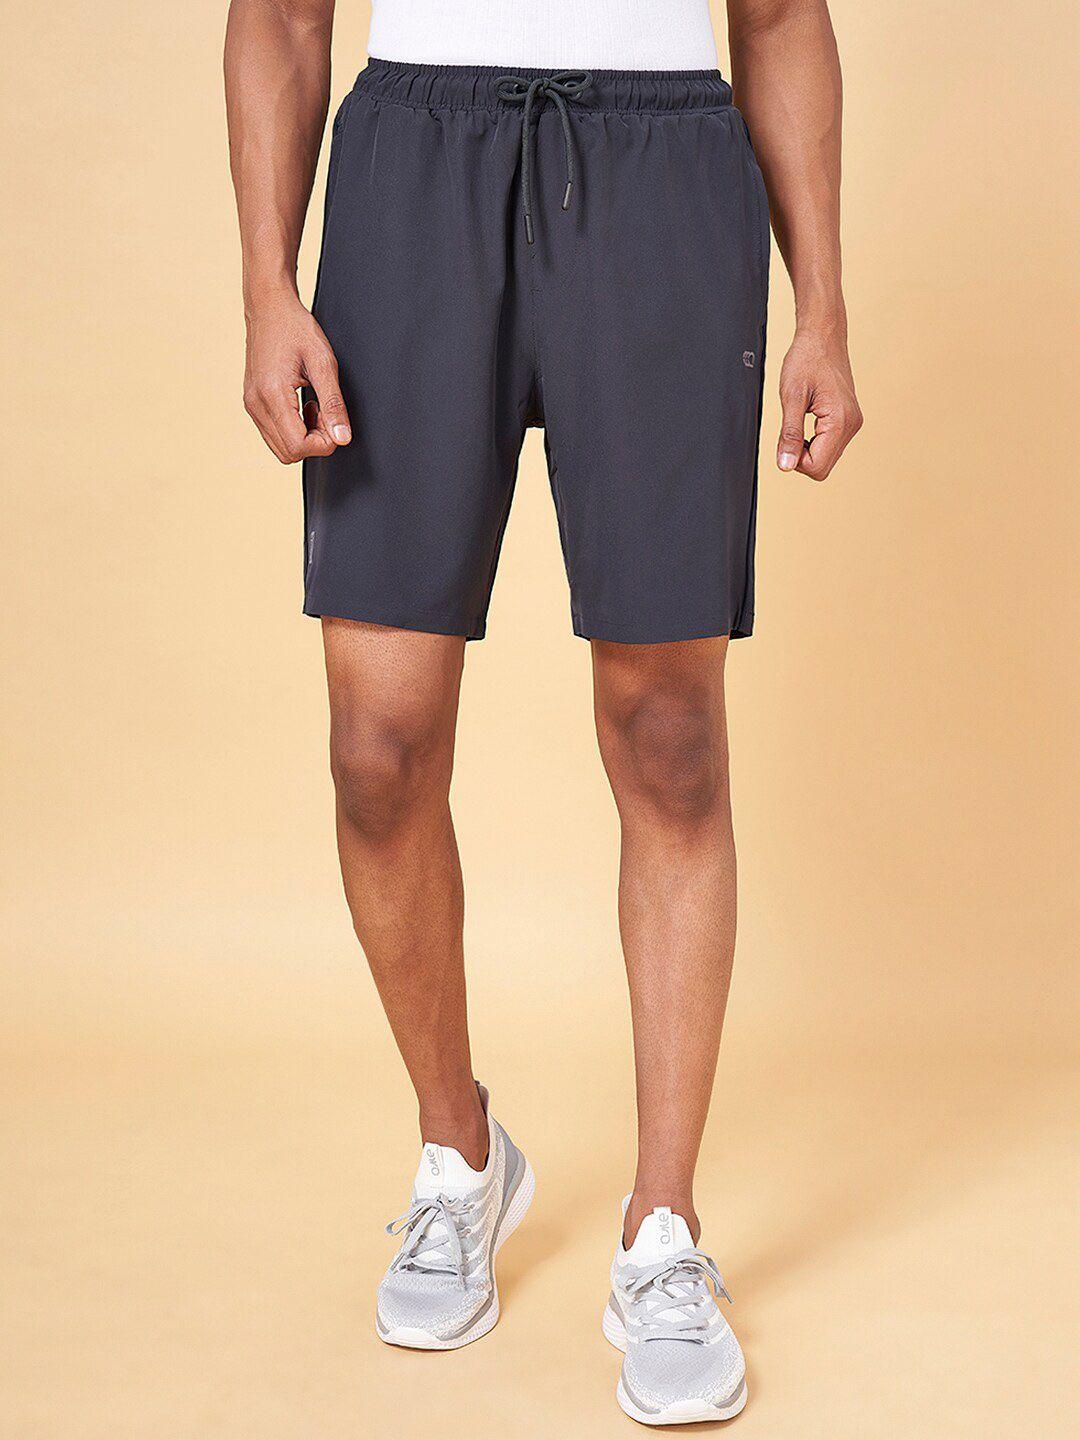 ajile by pantaloons men slim fit outdoor sports shorts